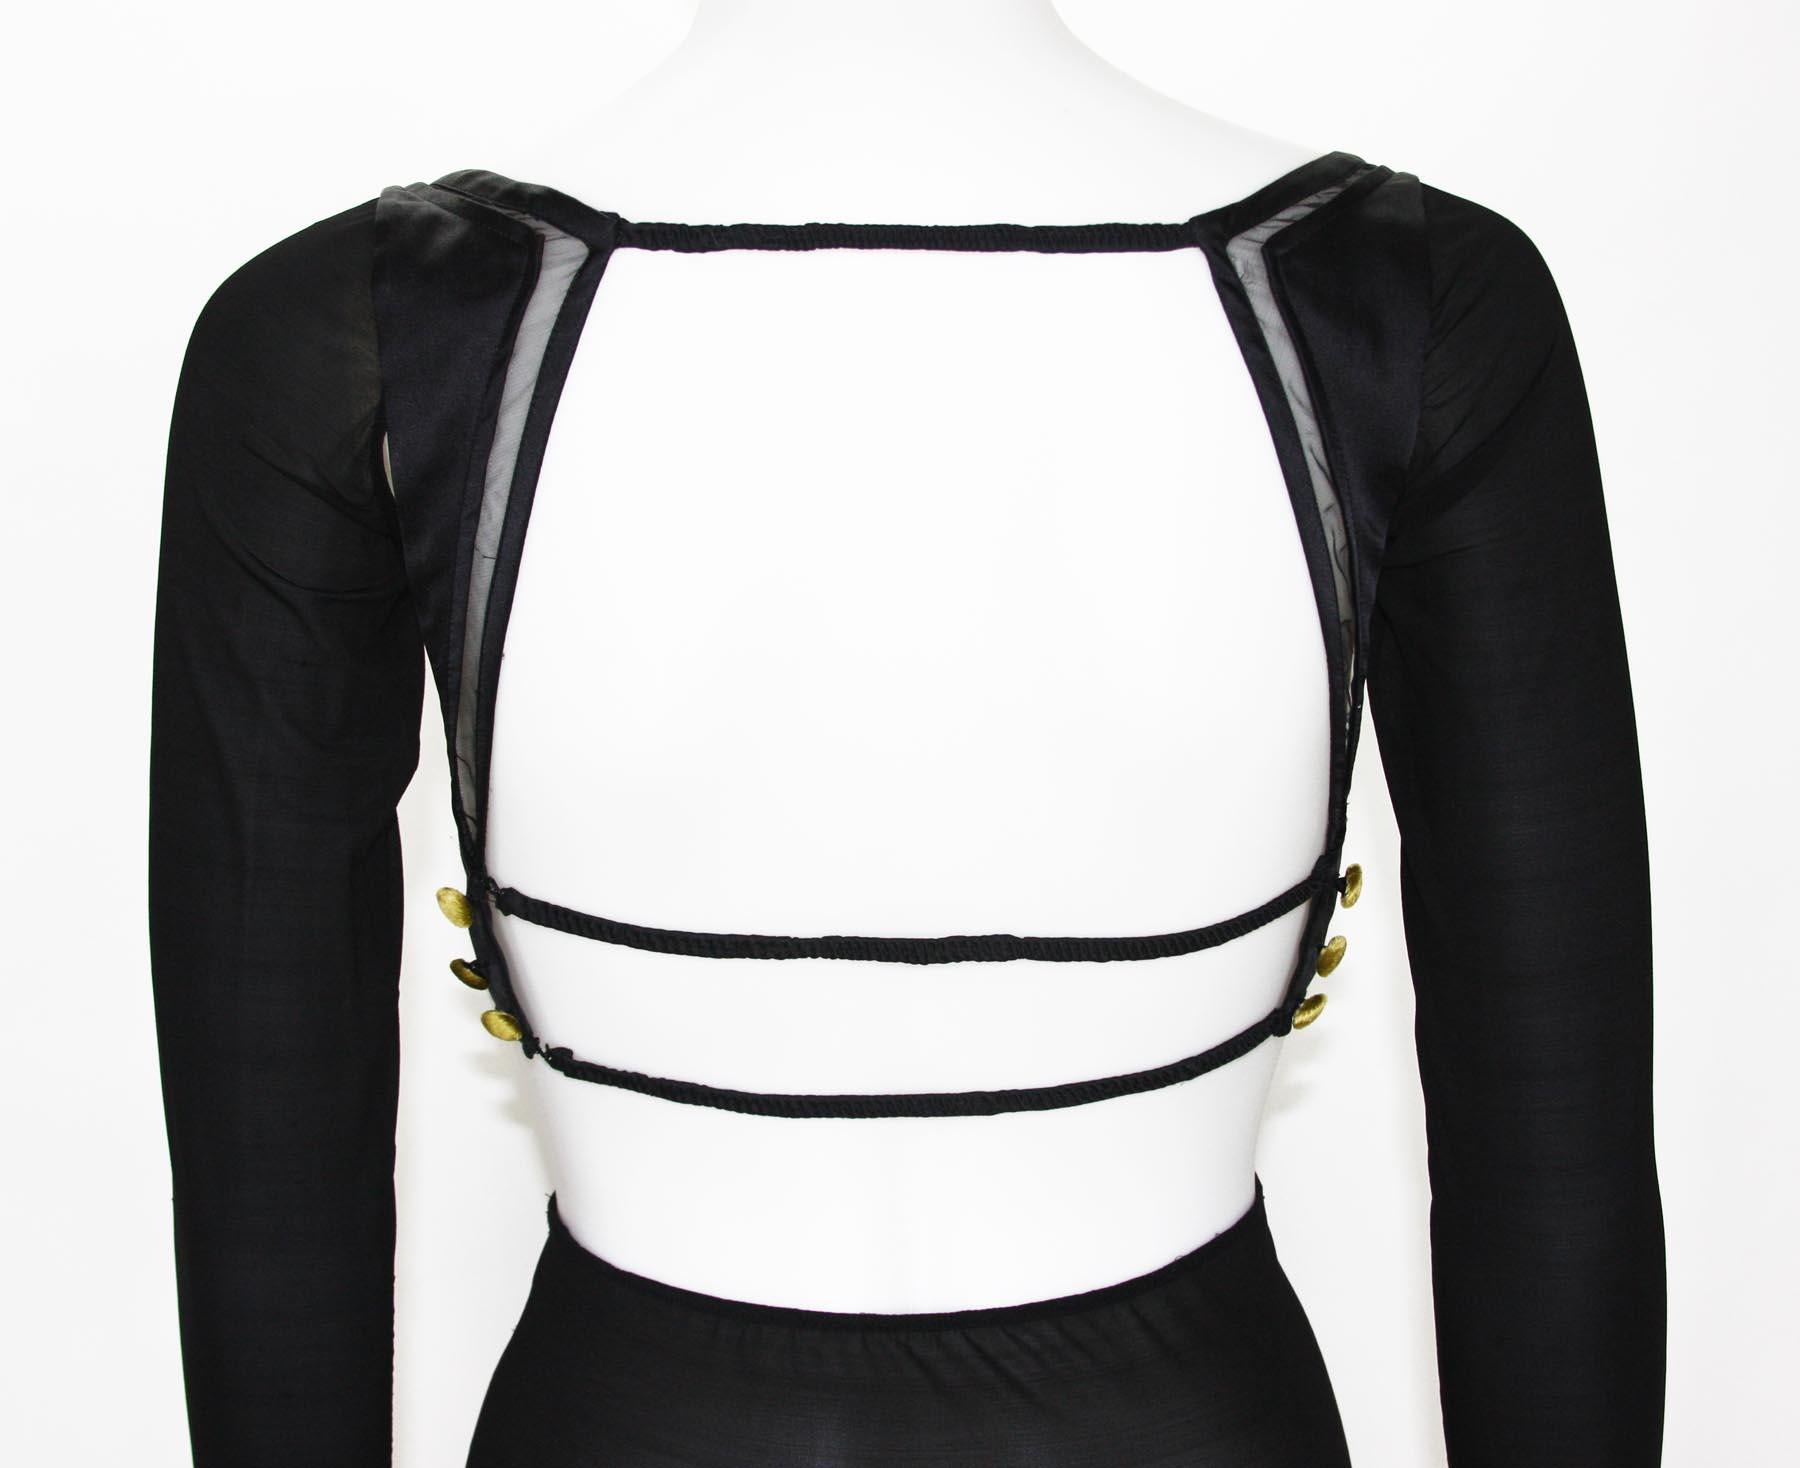 Tom Ford for Gucci Runway Black Sheer Cut-Out Top Bustier Velvet Details It.38 For Sale 1